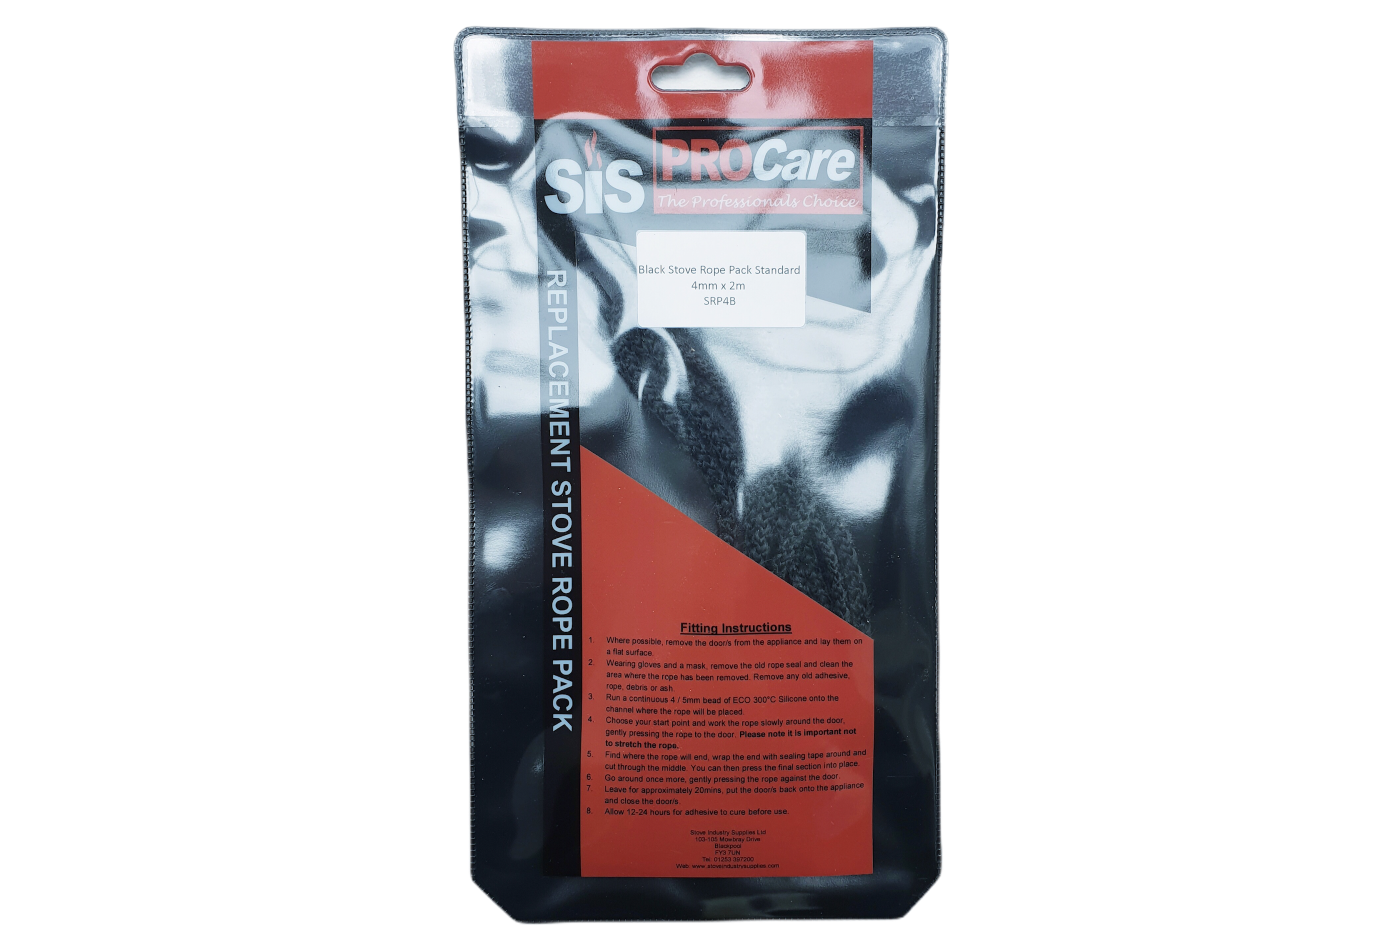 SiS Procare Black 4 milimetre x 2 metre Standard Stove Rope Pack - product code SRP4B